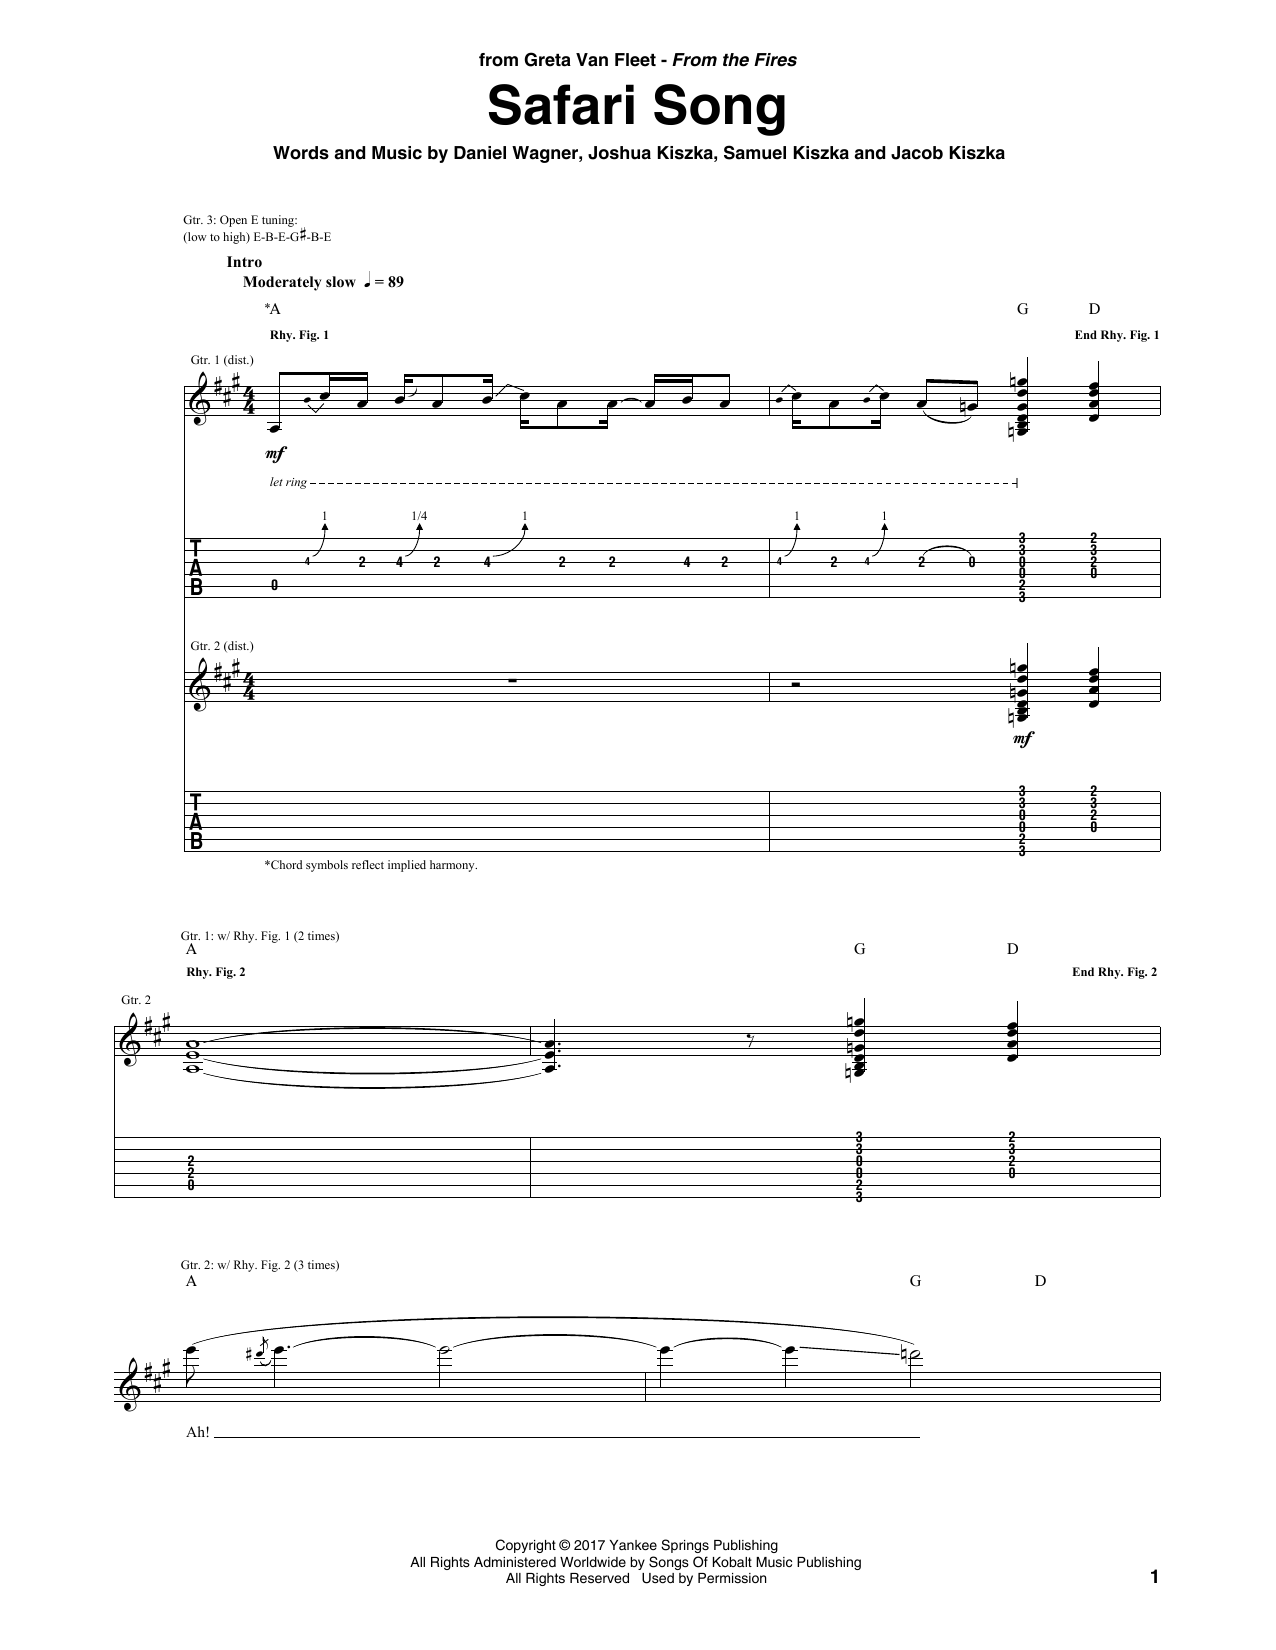 Greta Van Fleet Safari Song Sheet Music Notes & Chords for Guitar Tab - Download or Print PDF